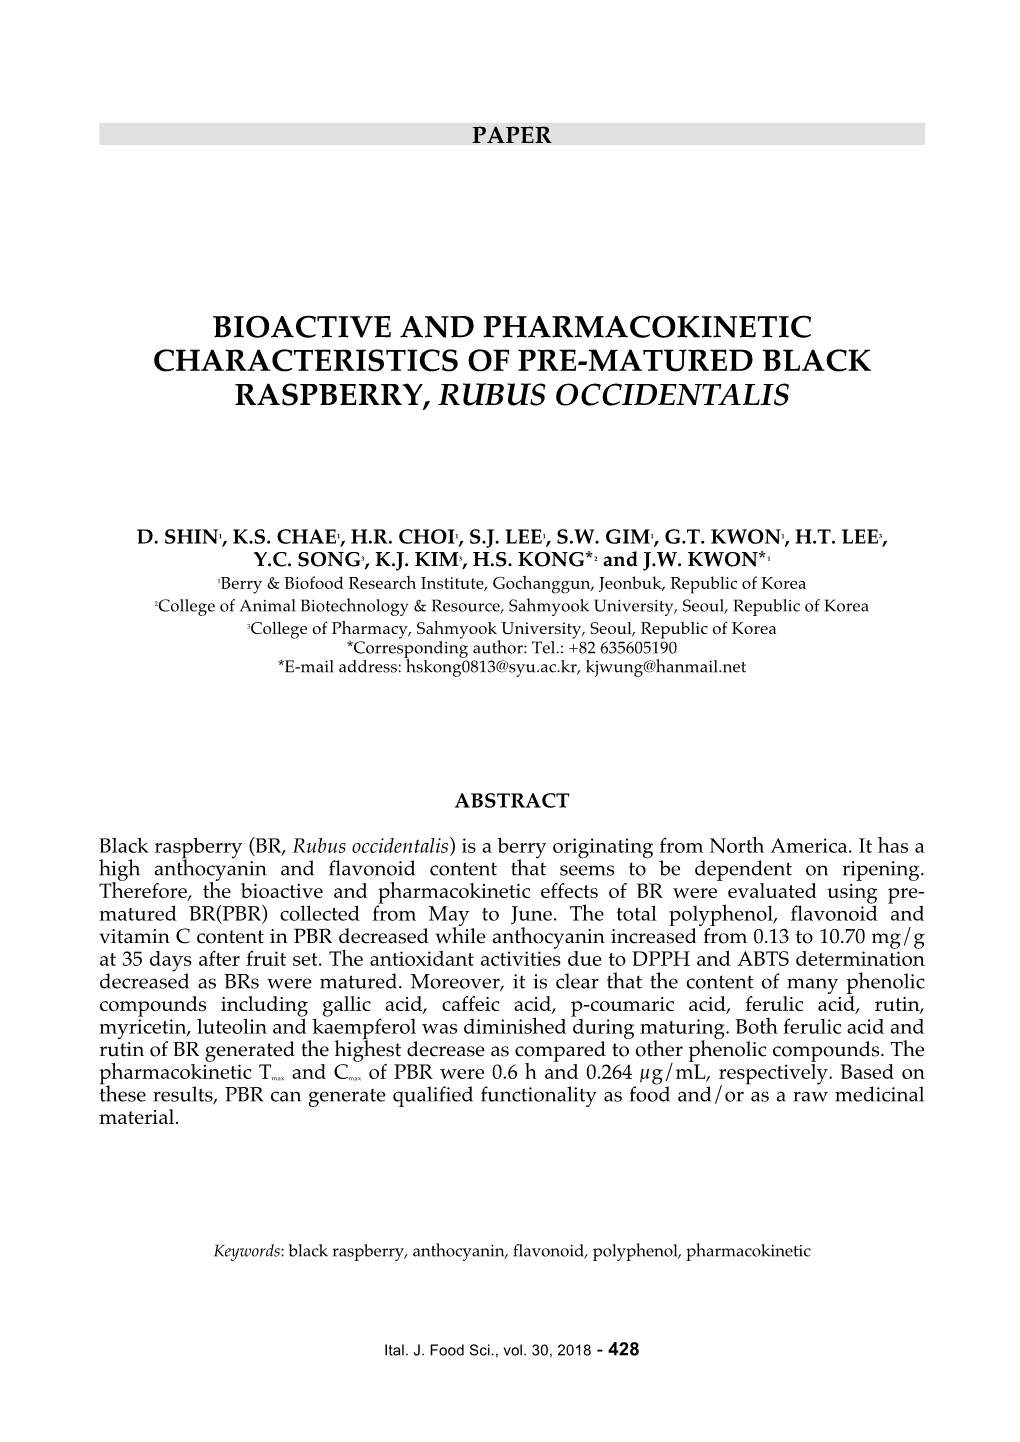 Bioactive and Pharmacokinetic Characteristics of Pre-Matured Black Raspberry, Rubus Occidentalis